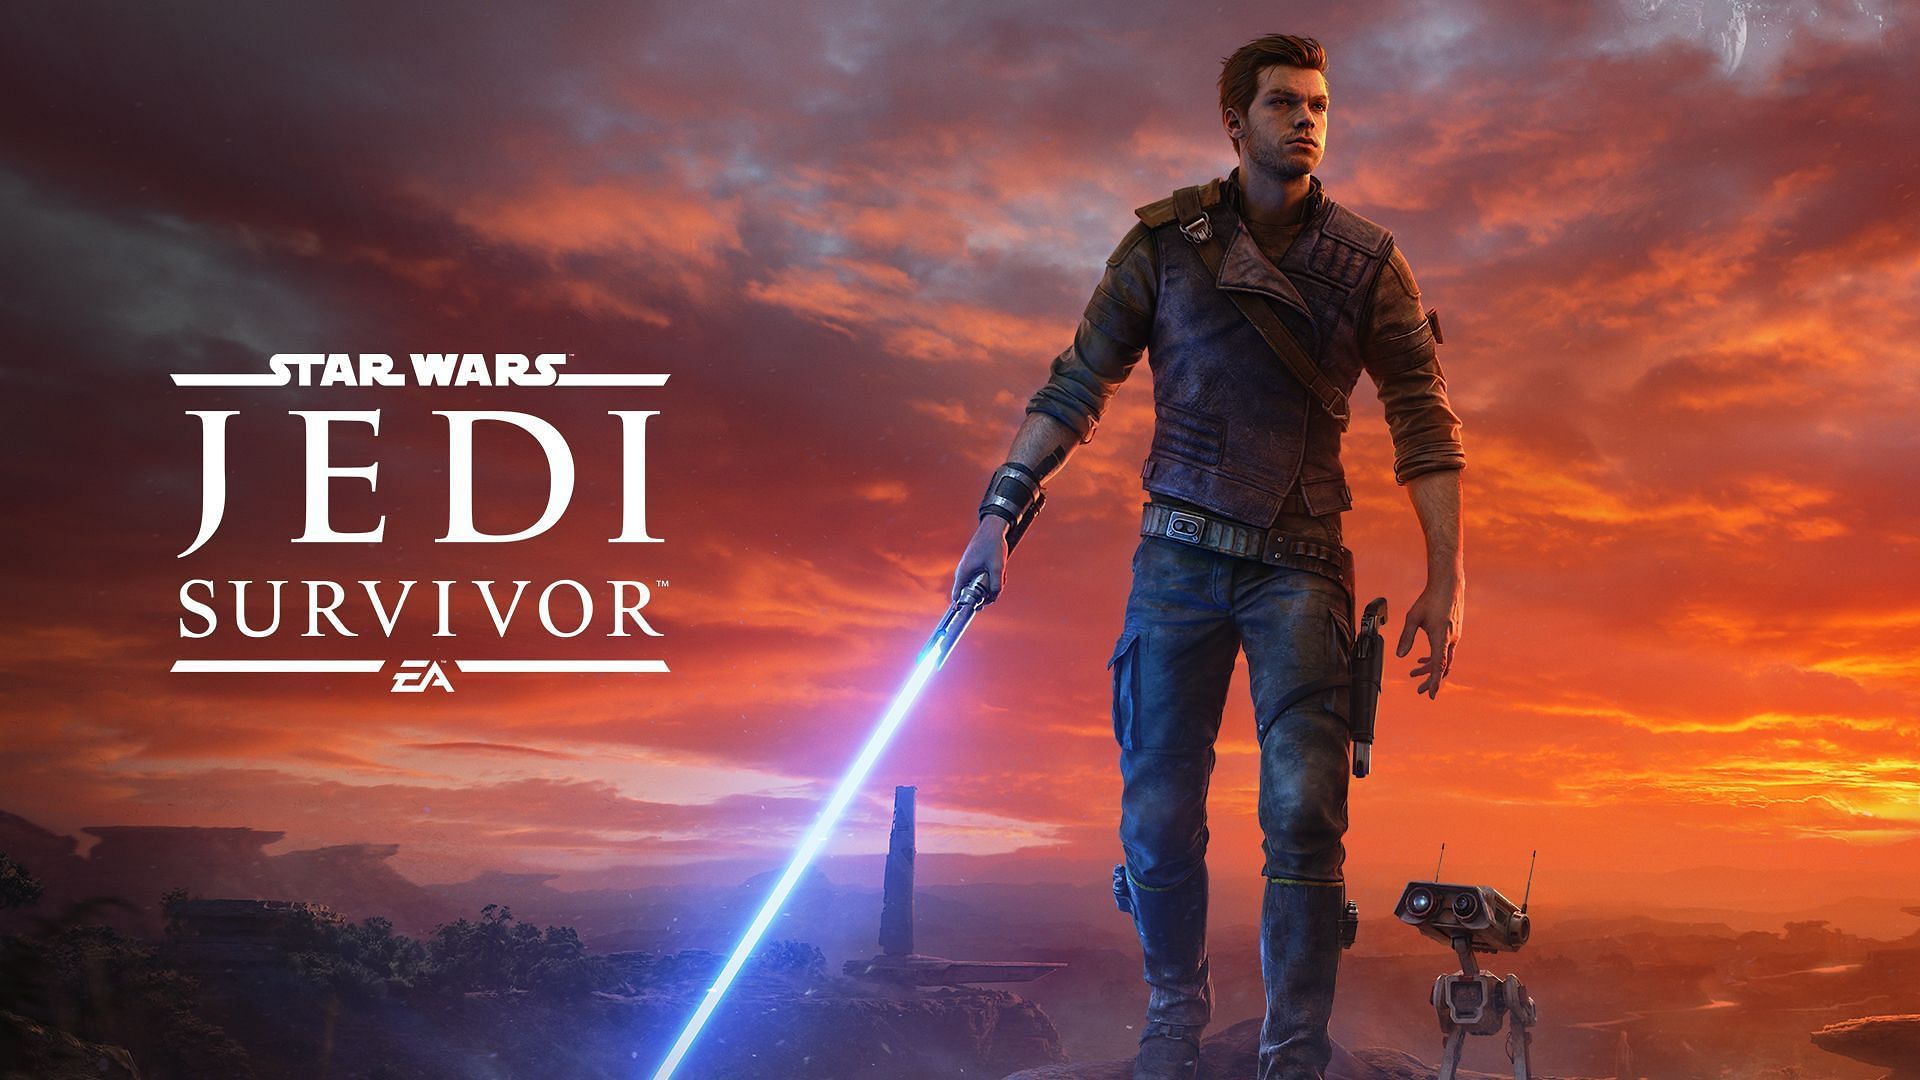 Star Wars jedi Survivor is making its way to Xbox Game Pass (Image via Respawn Entertainment)